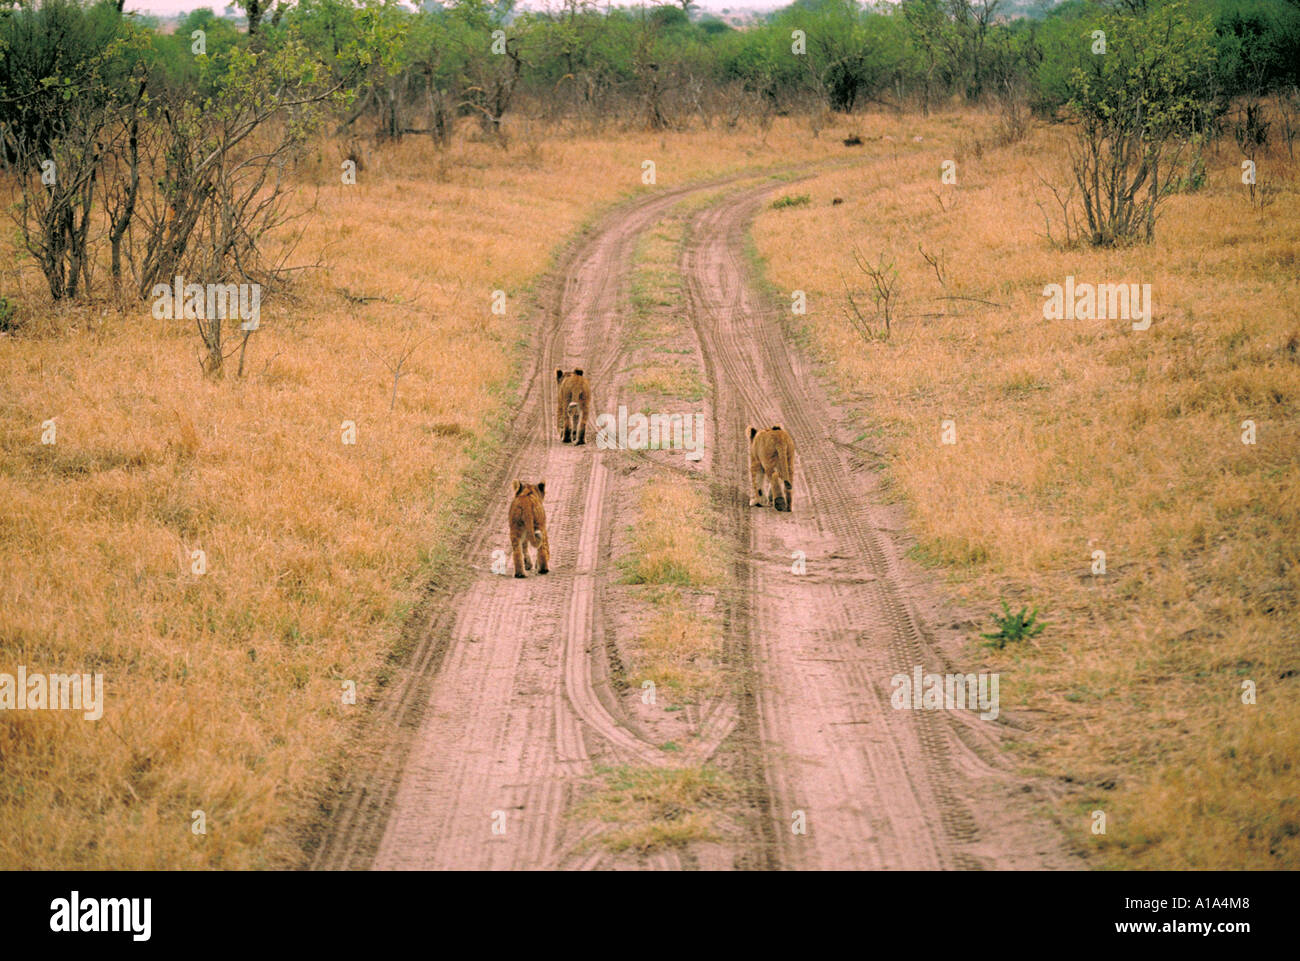 Southwest African or Katanga Lion Cubs, Panthera leo bleyenberghi, Chobe, Botswana, Africa Stock Photo